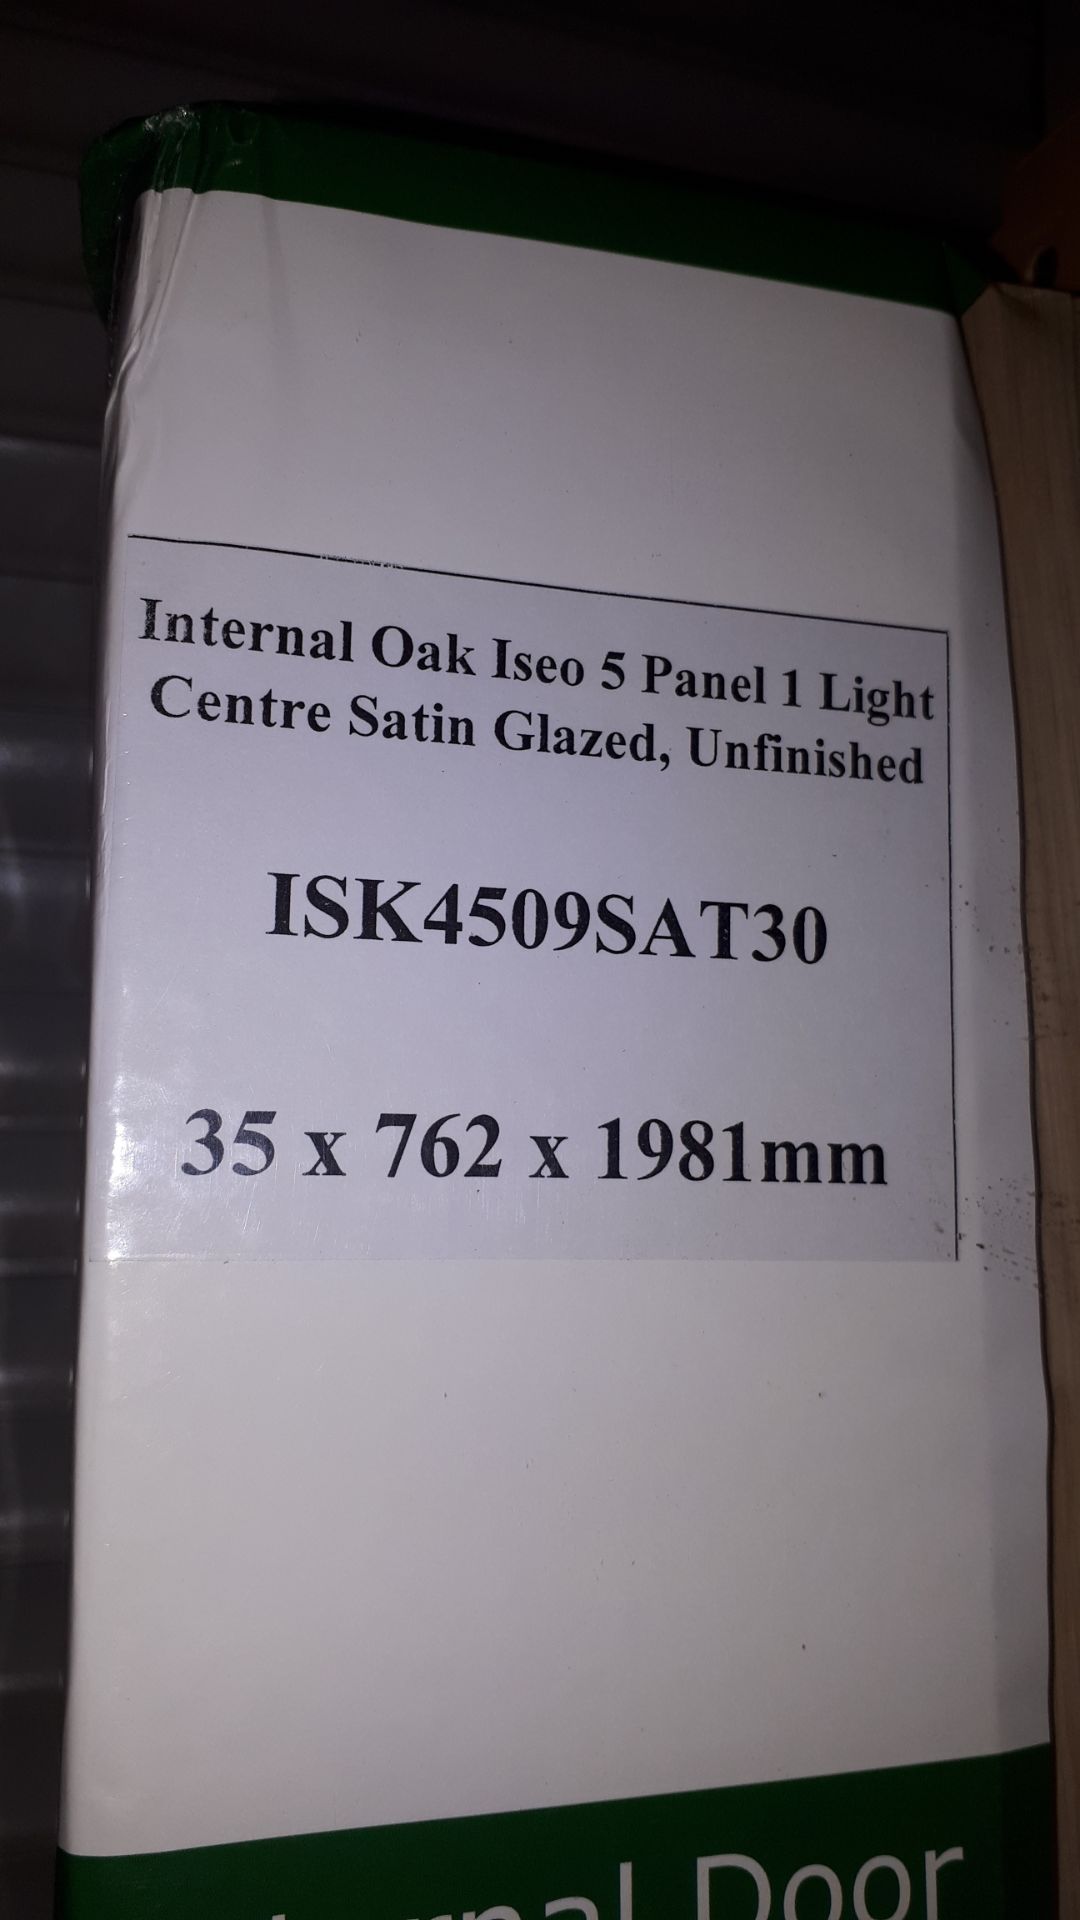 6 x Internal Oak Iseo 5 Panel 1 Light Centre Satin Glazed, Unfinished, 35 x 762 x 1981mm - Image 2 of 2